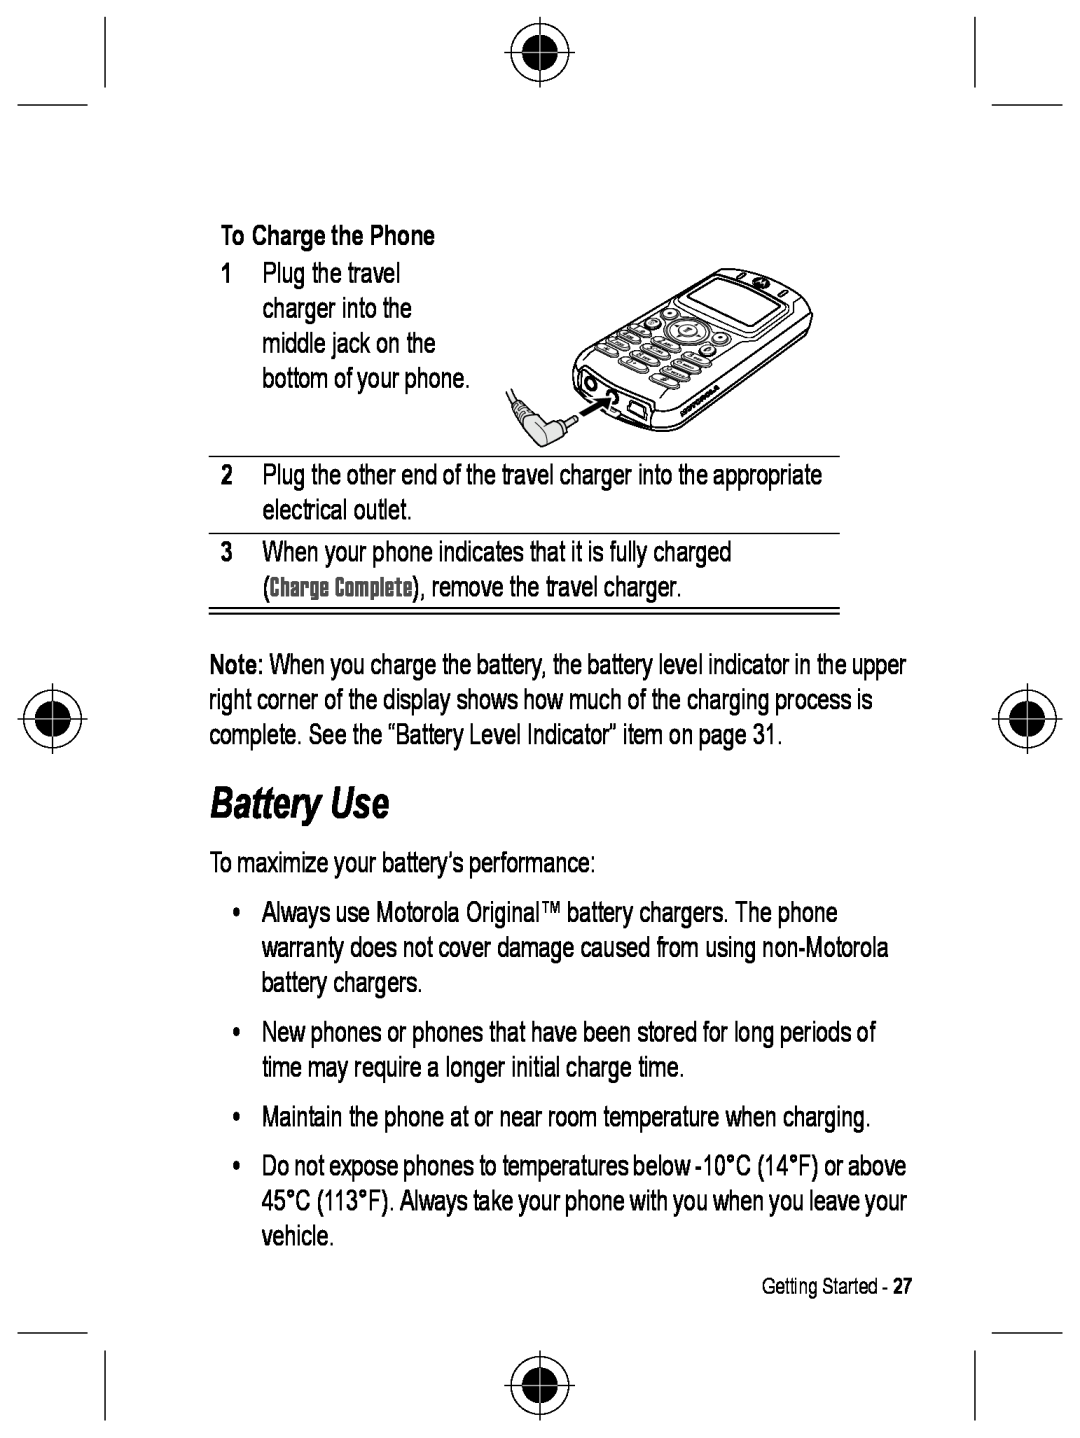 Motorola C330 manual Battery Use 